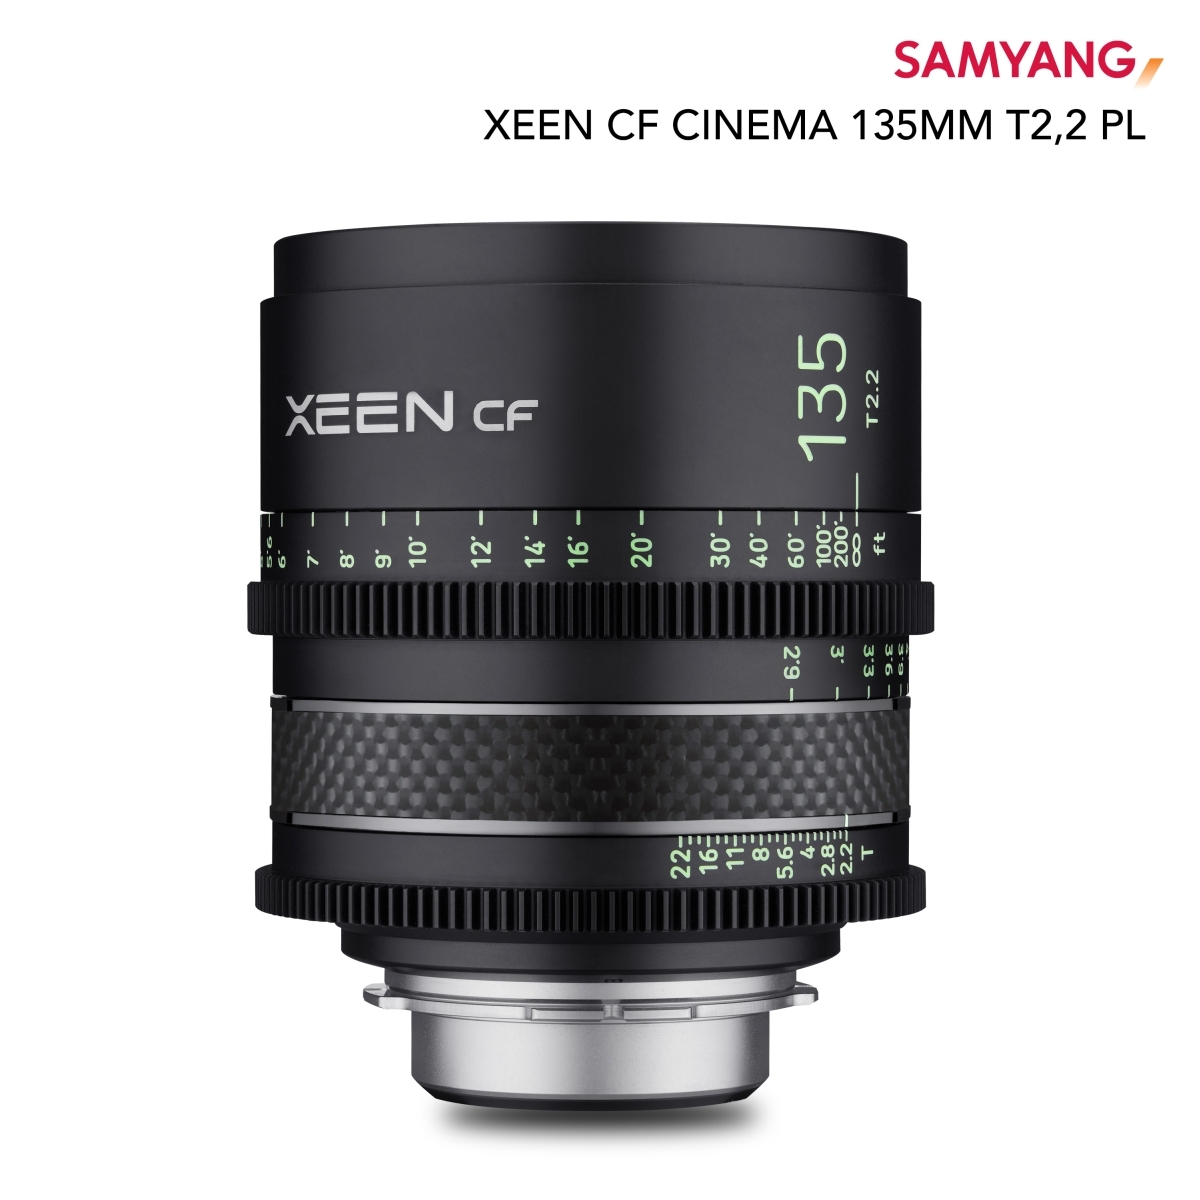 XEEN CF Cinema 135mm T2,2 PL Fullframe